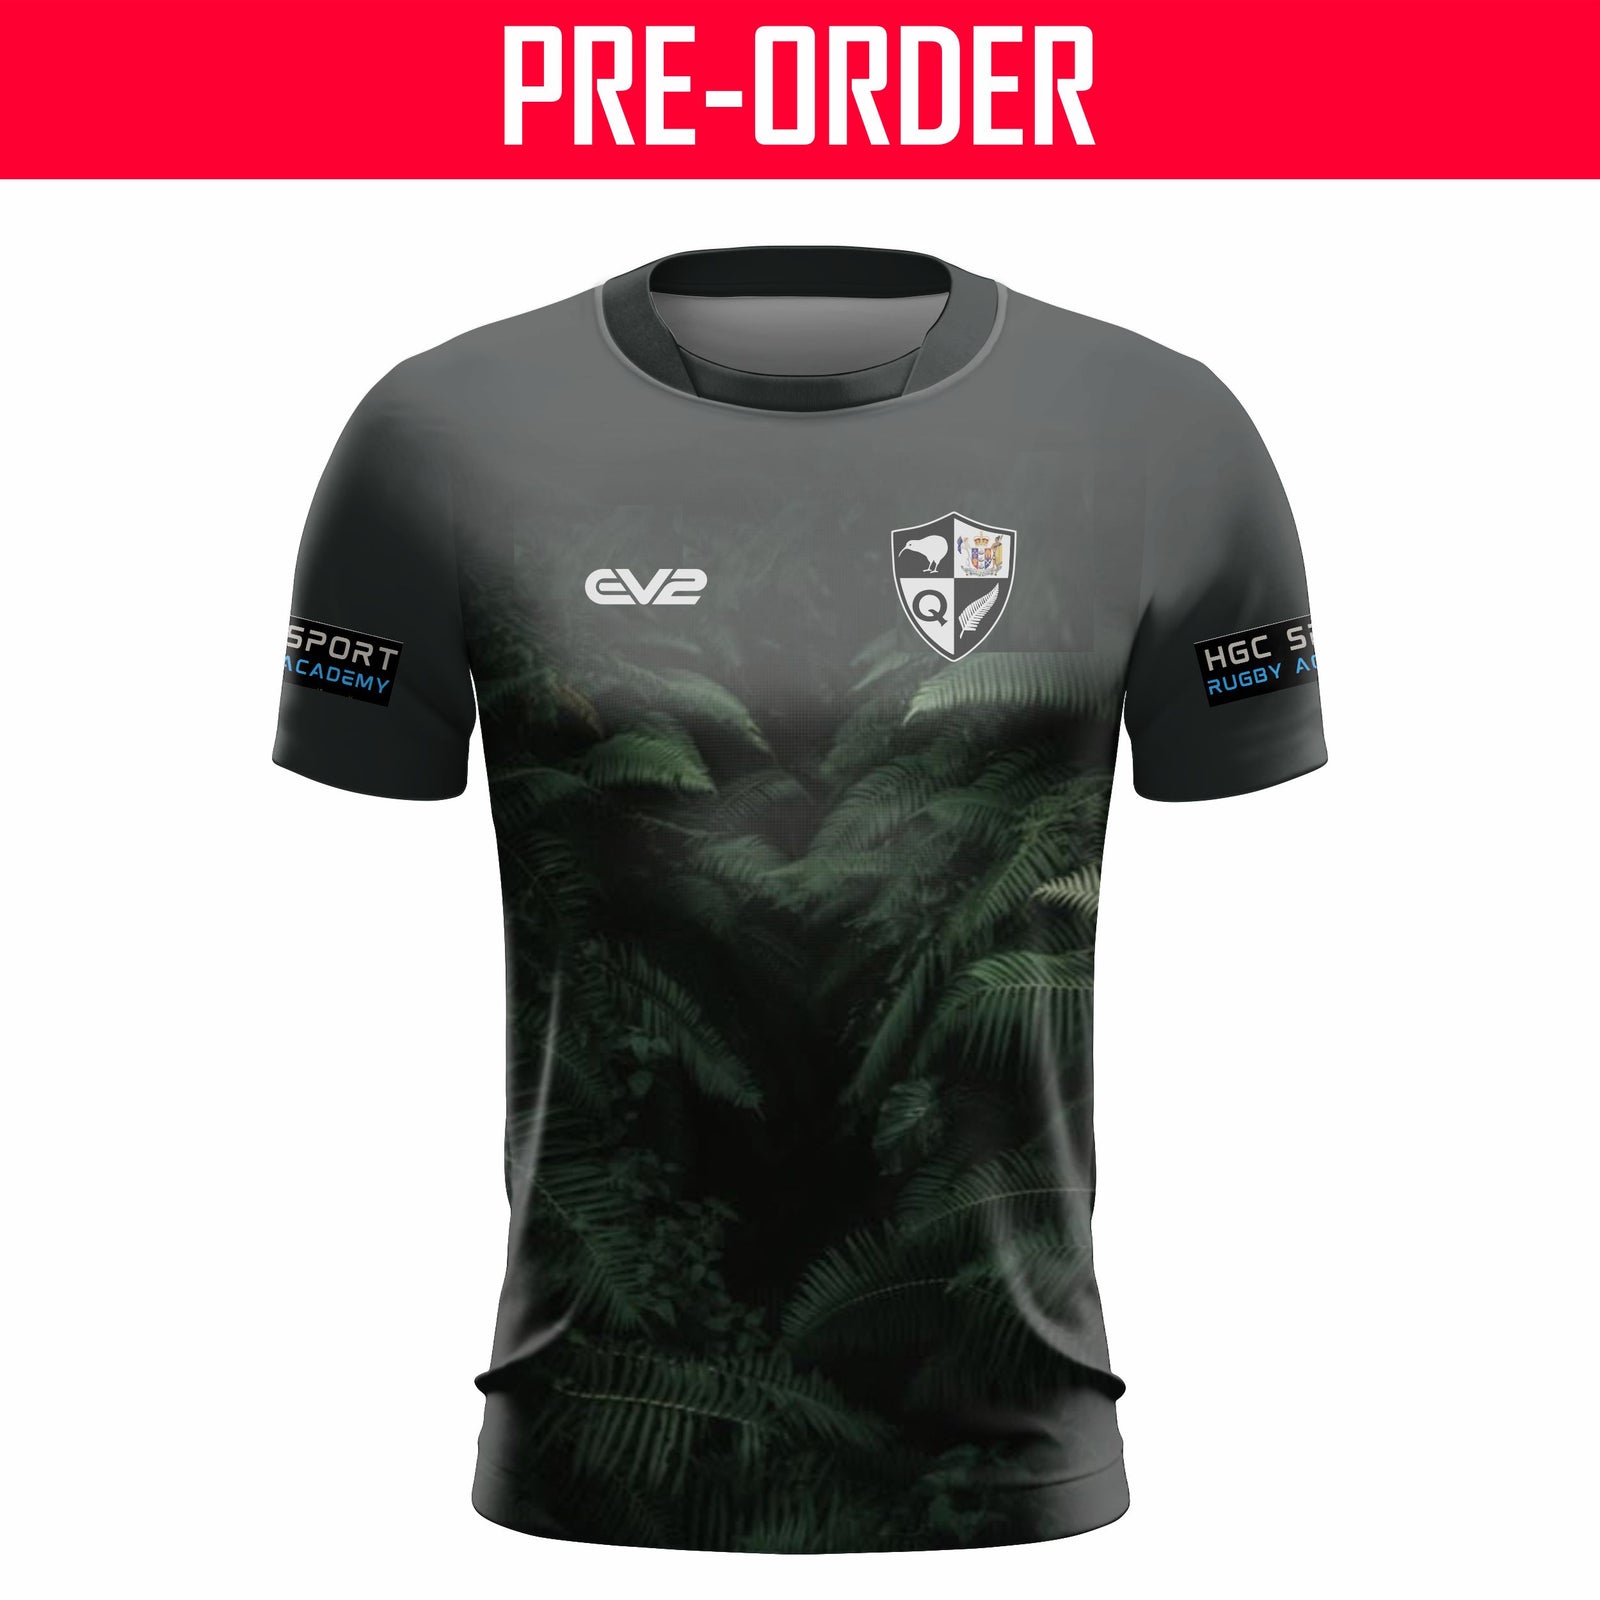 QLD Kiwi Rugby Union - Training Shirt